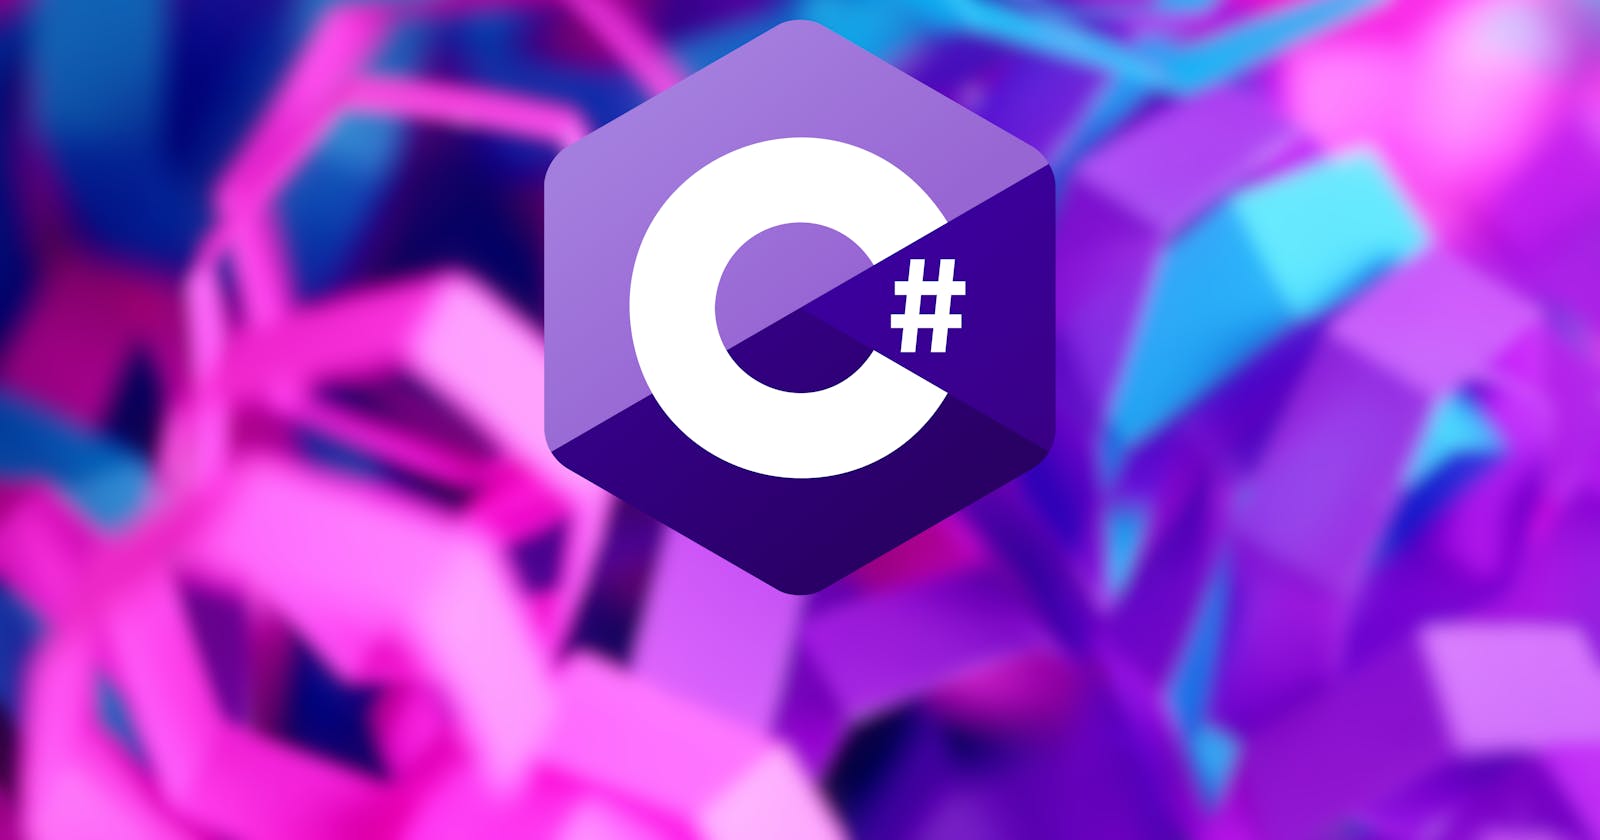 Beginner C#: Why learn C#?